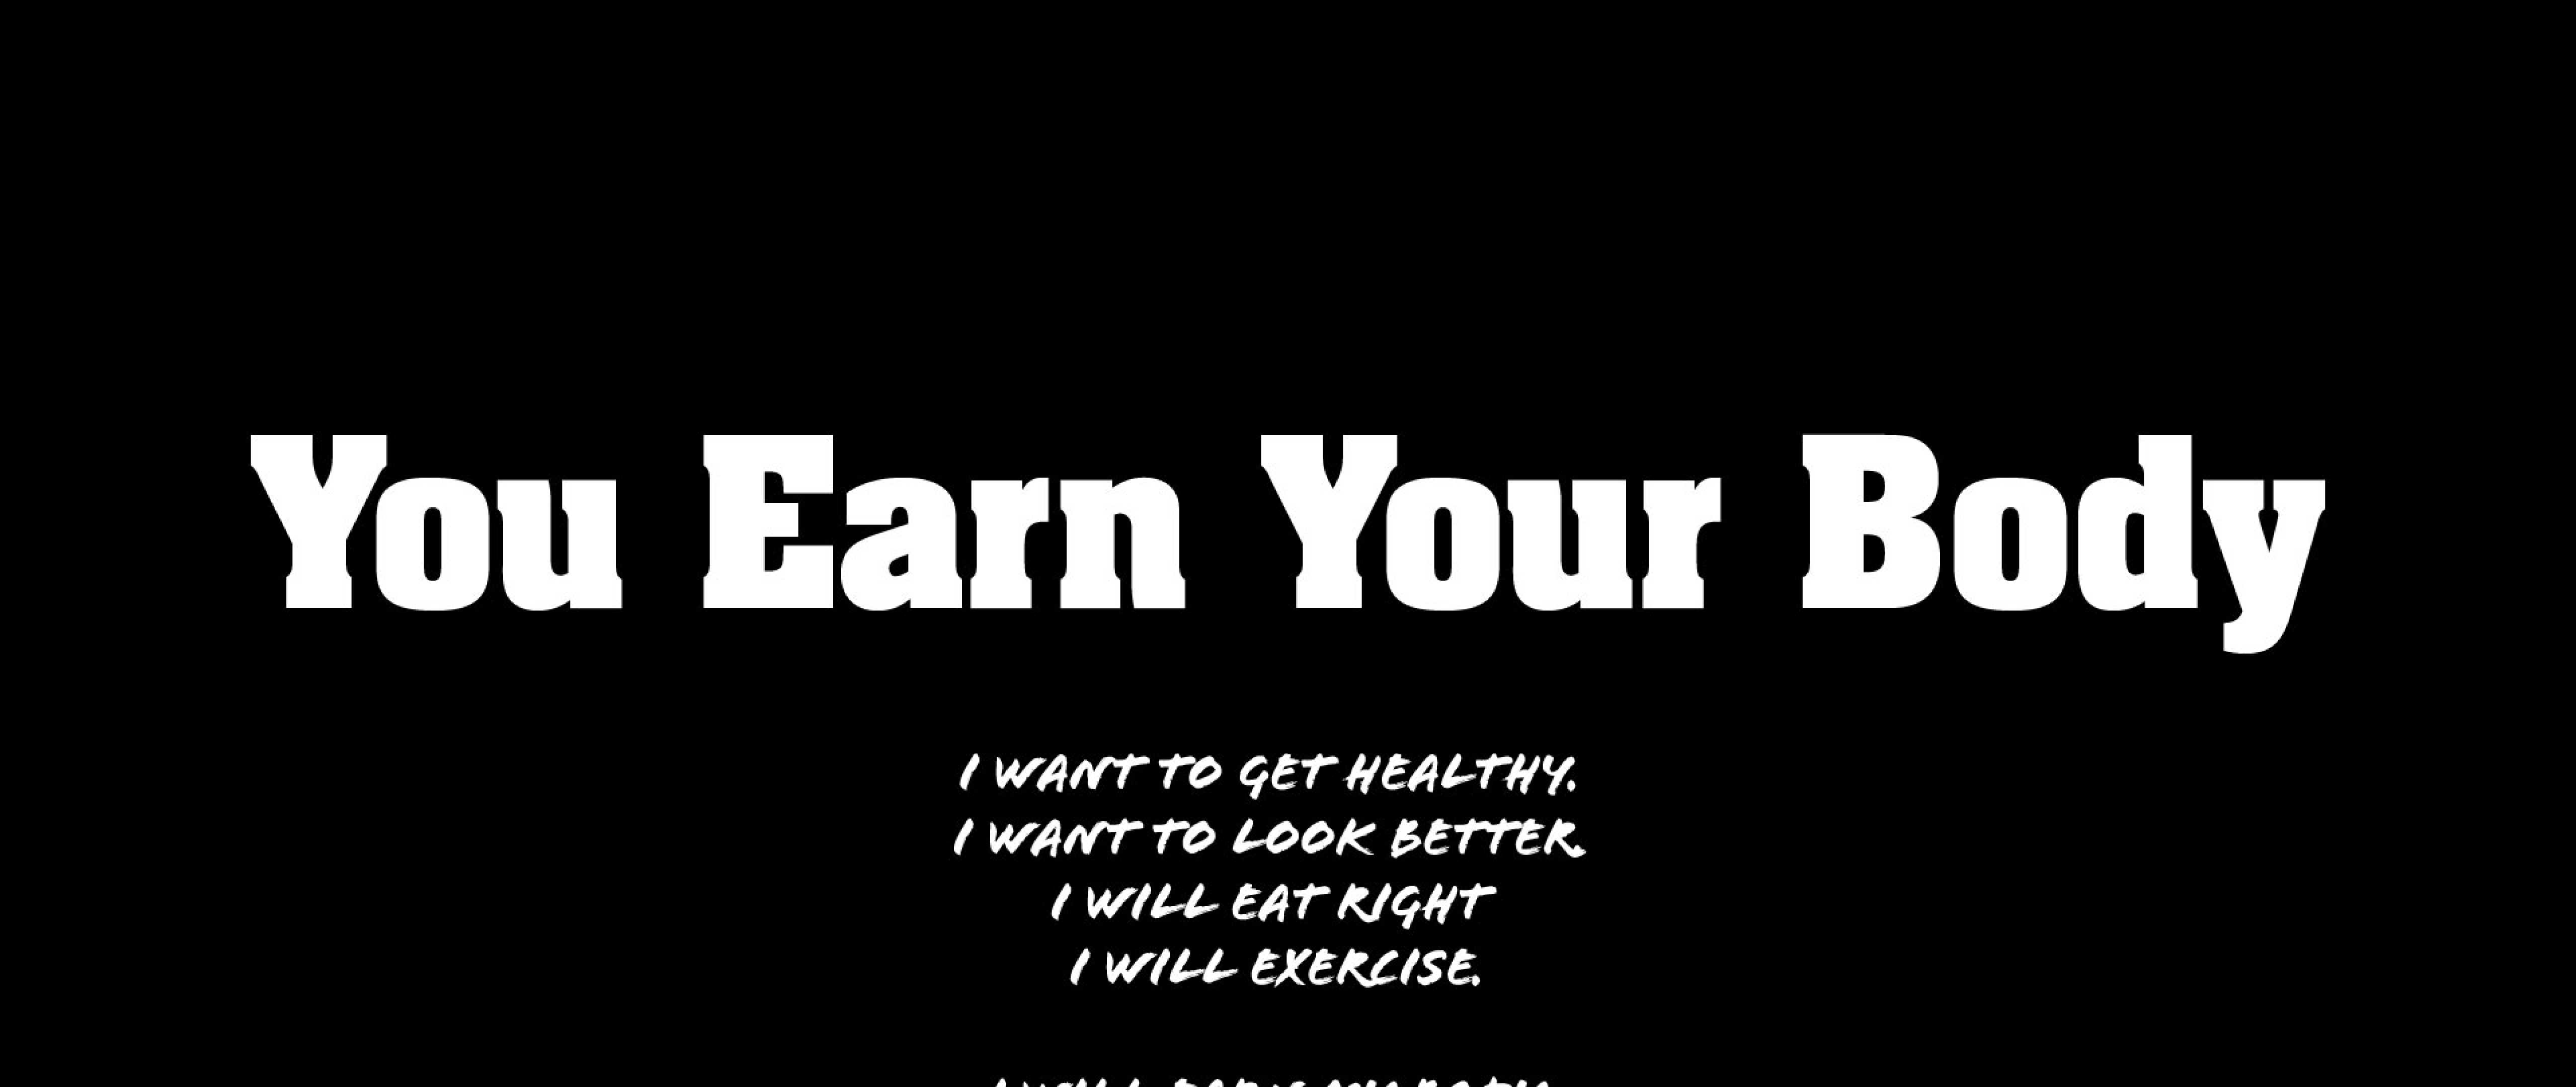 You earn your body HD Wallpaper